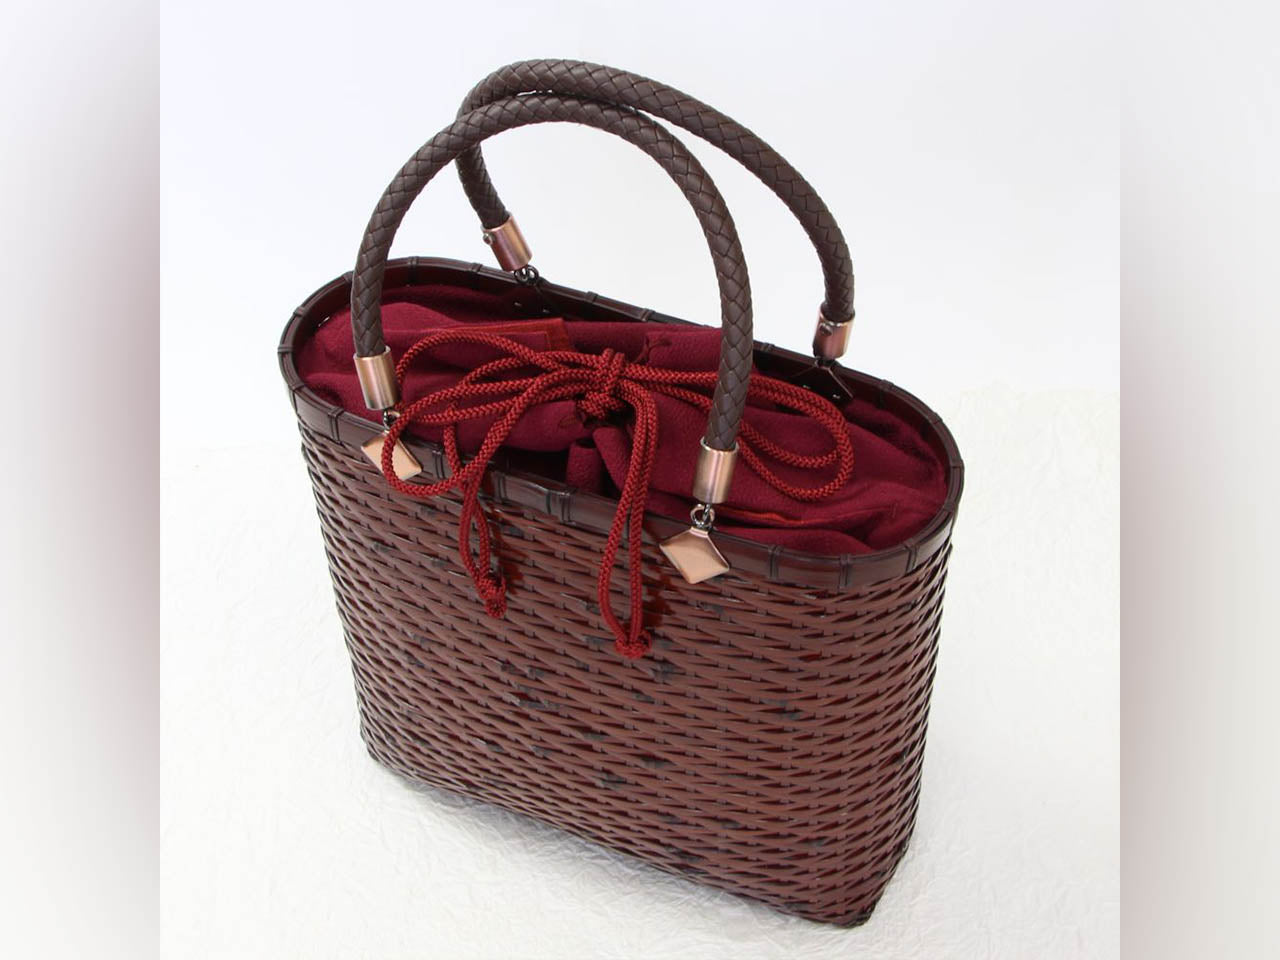 Japanese bamboo picnic basket reborn as handbag | Woodworking Network